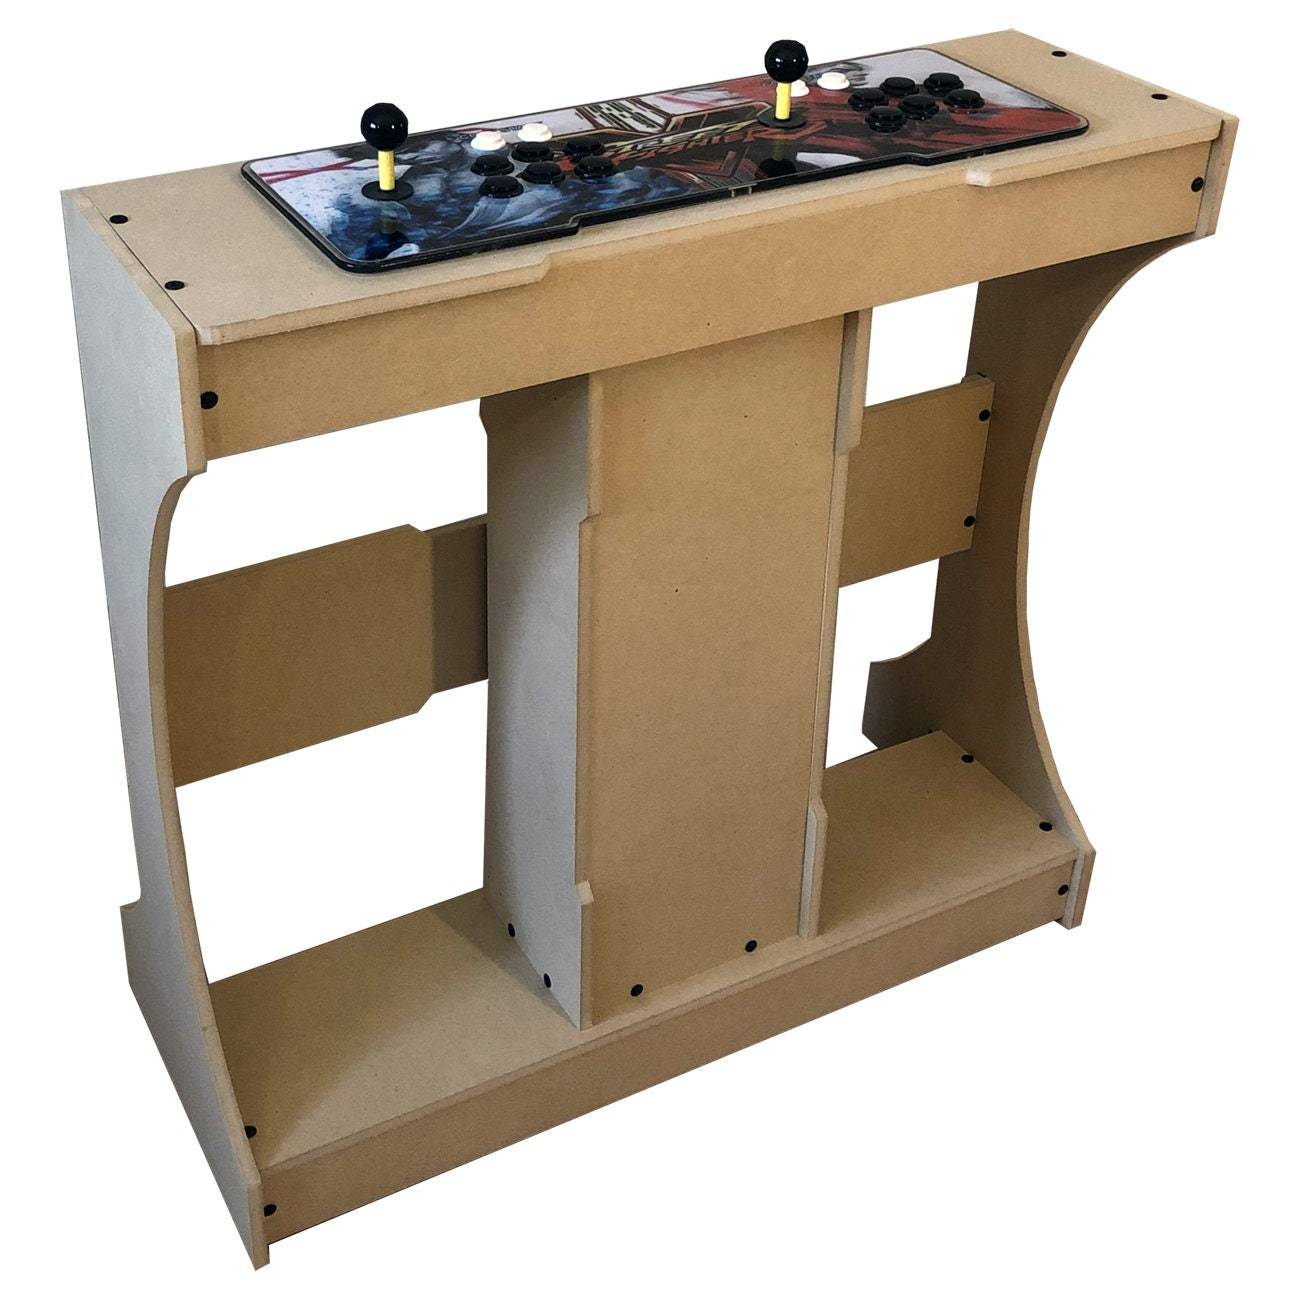 DPAP+ Deluxe Pandora's Box Drop-In Arcade Pedestal Kit diy Kit flat pack mdf Eas